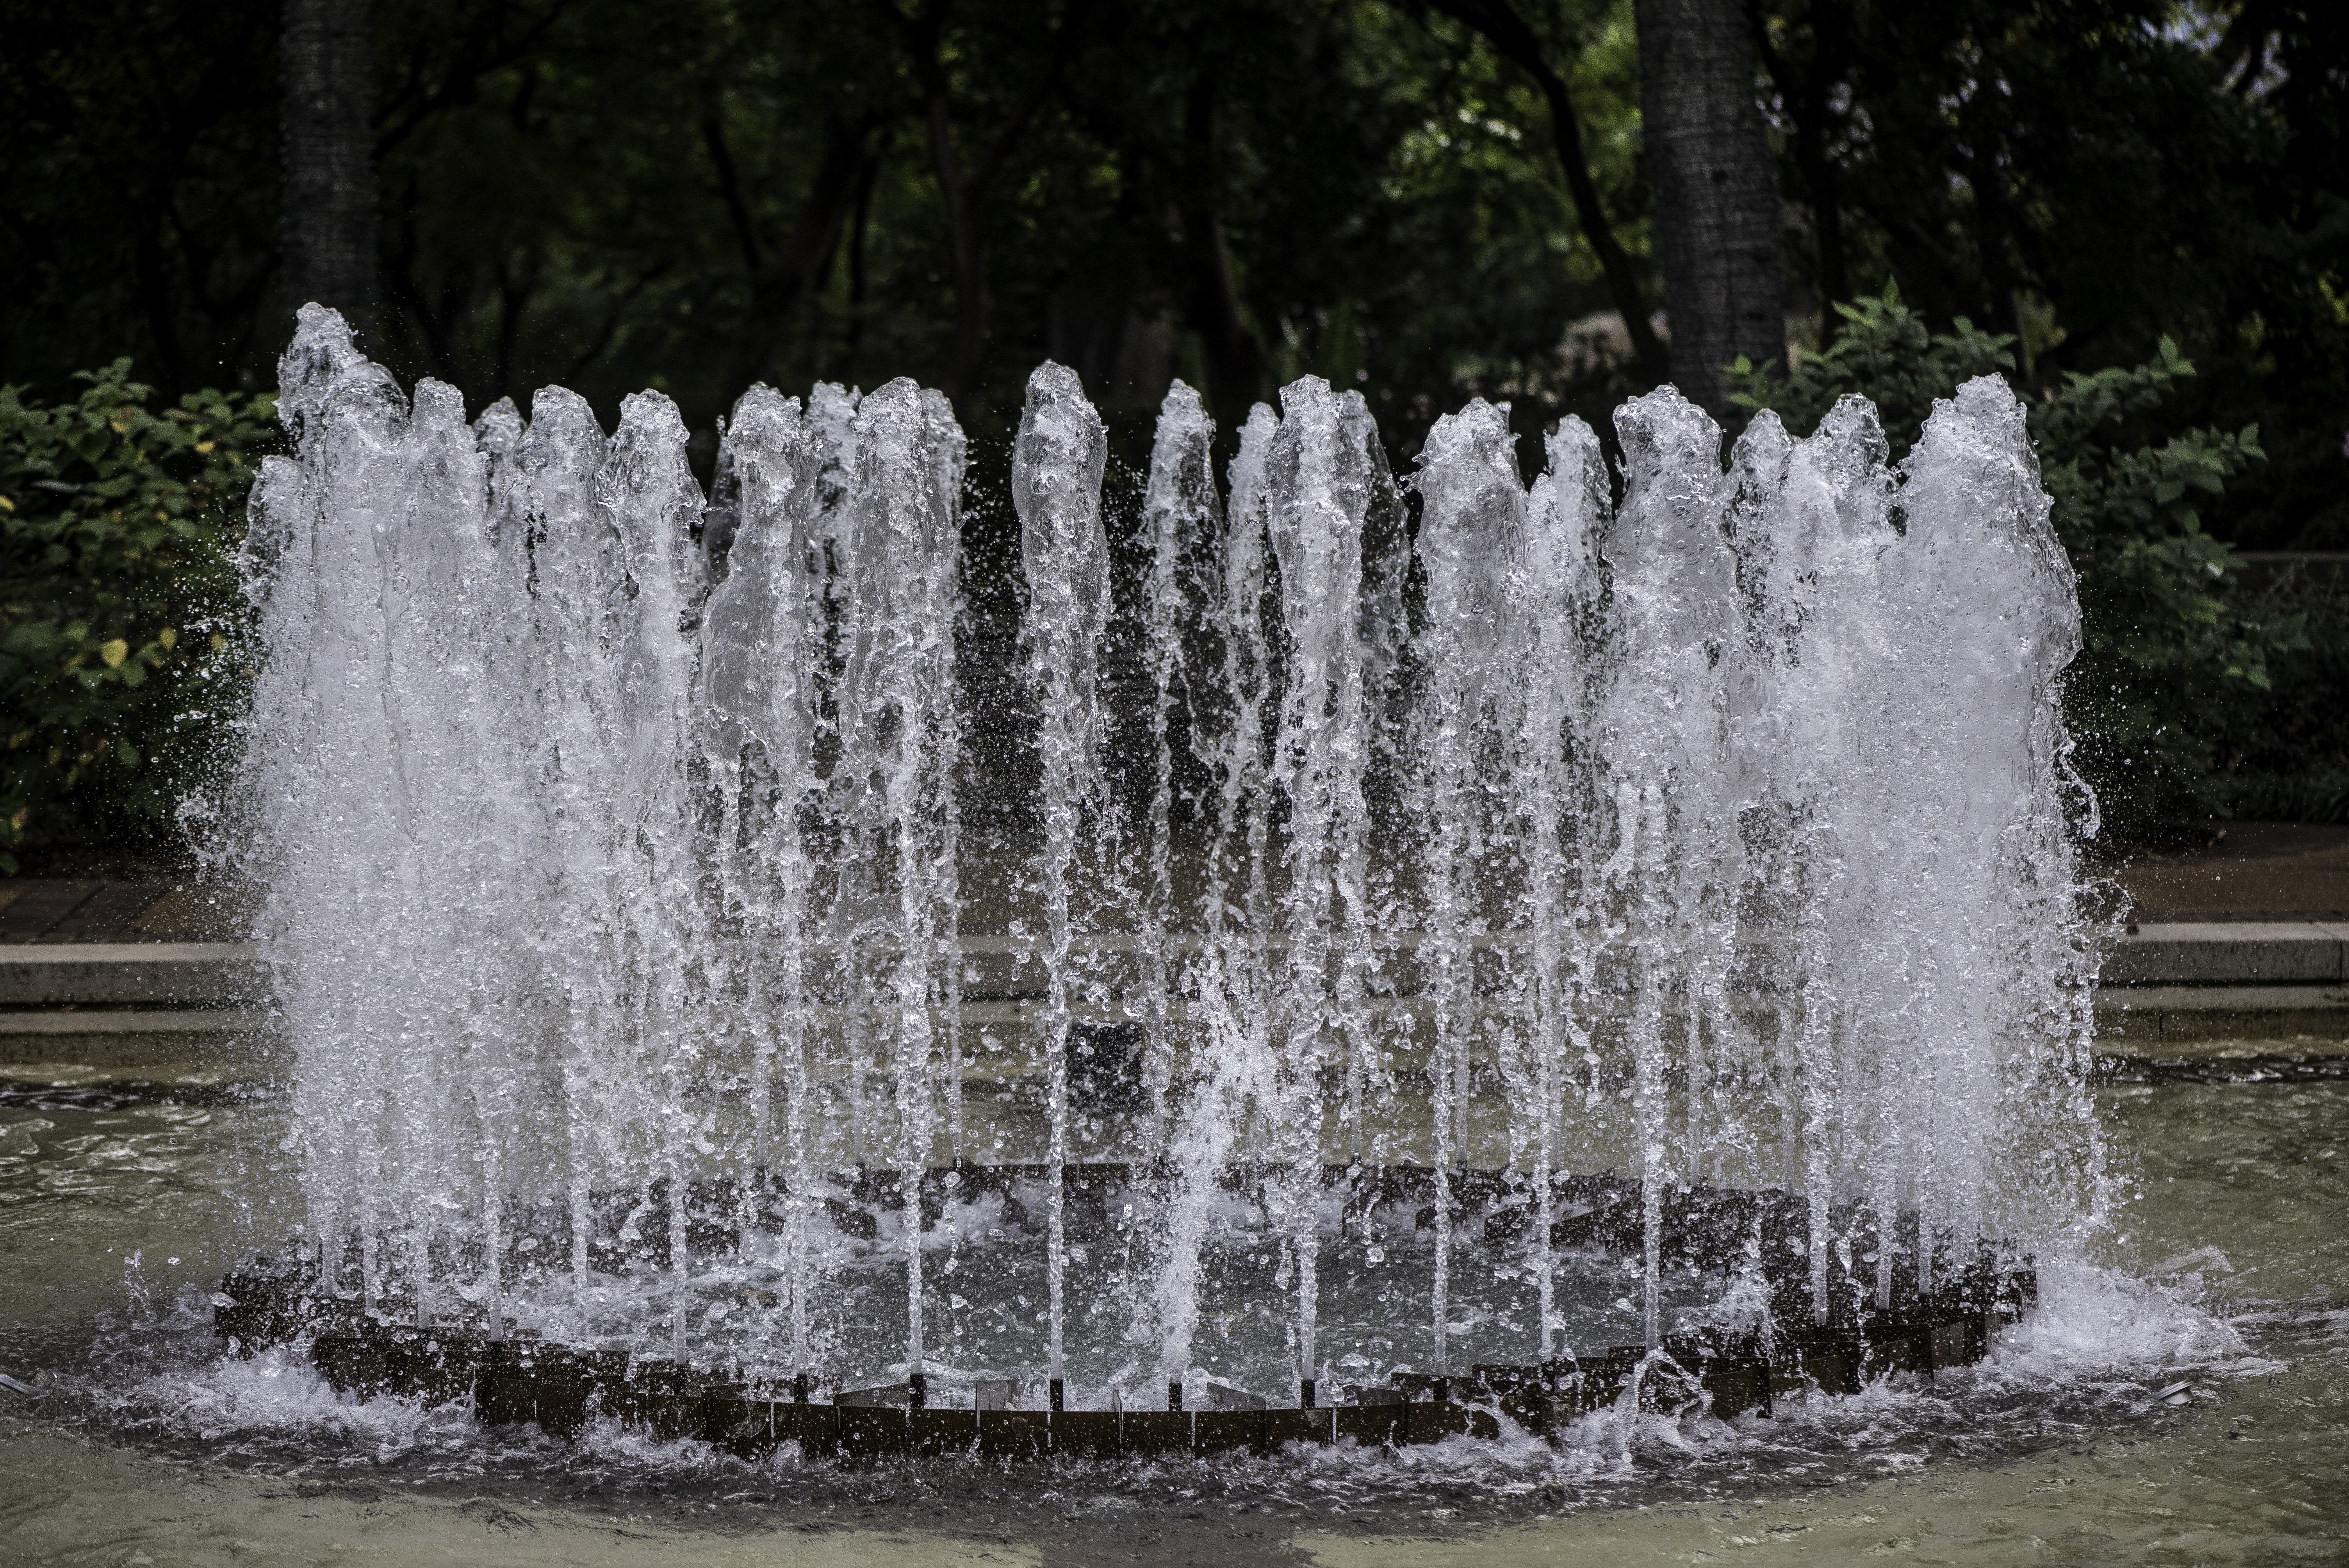 Water Fountain at Botanical Gardens image - Free stock photo ...